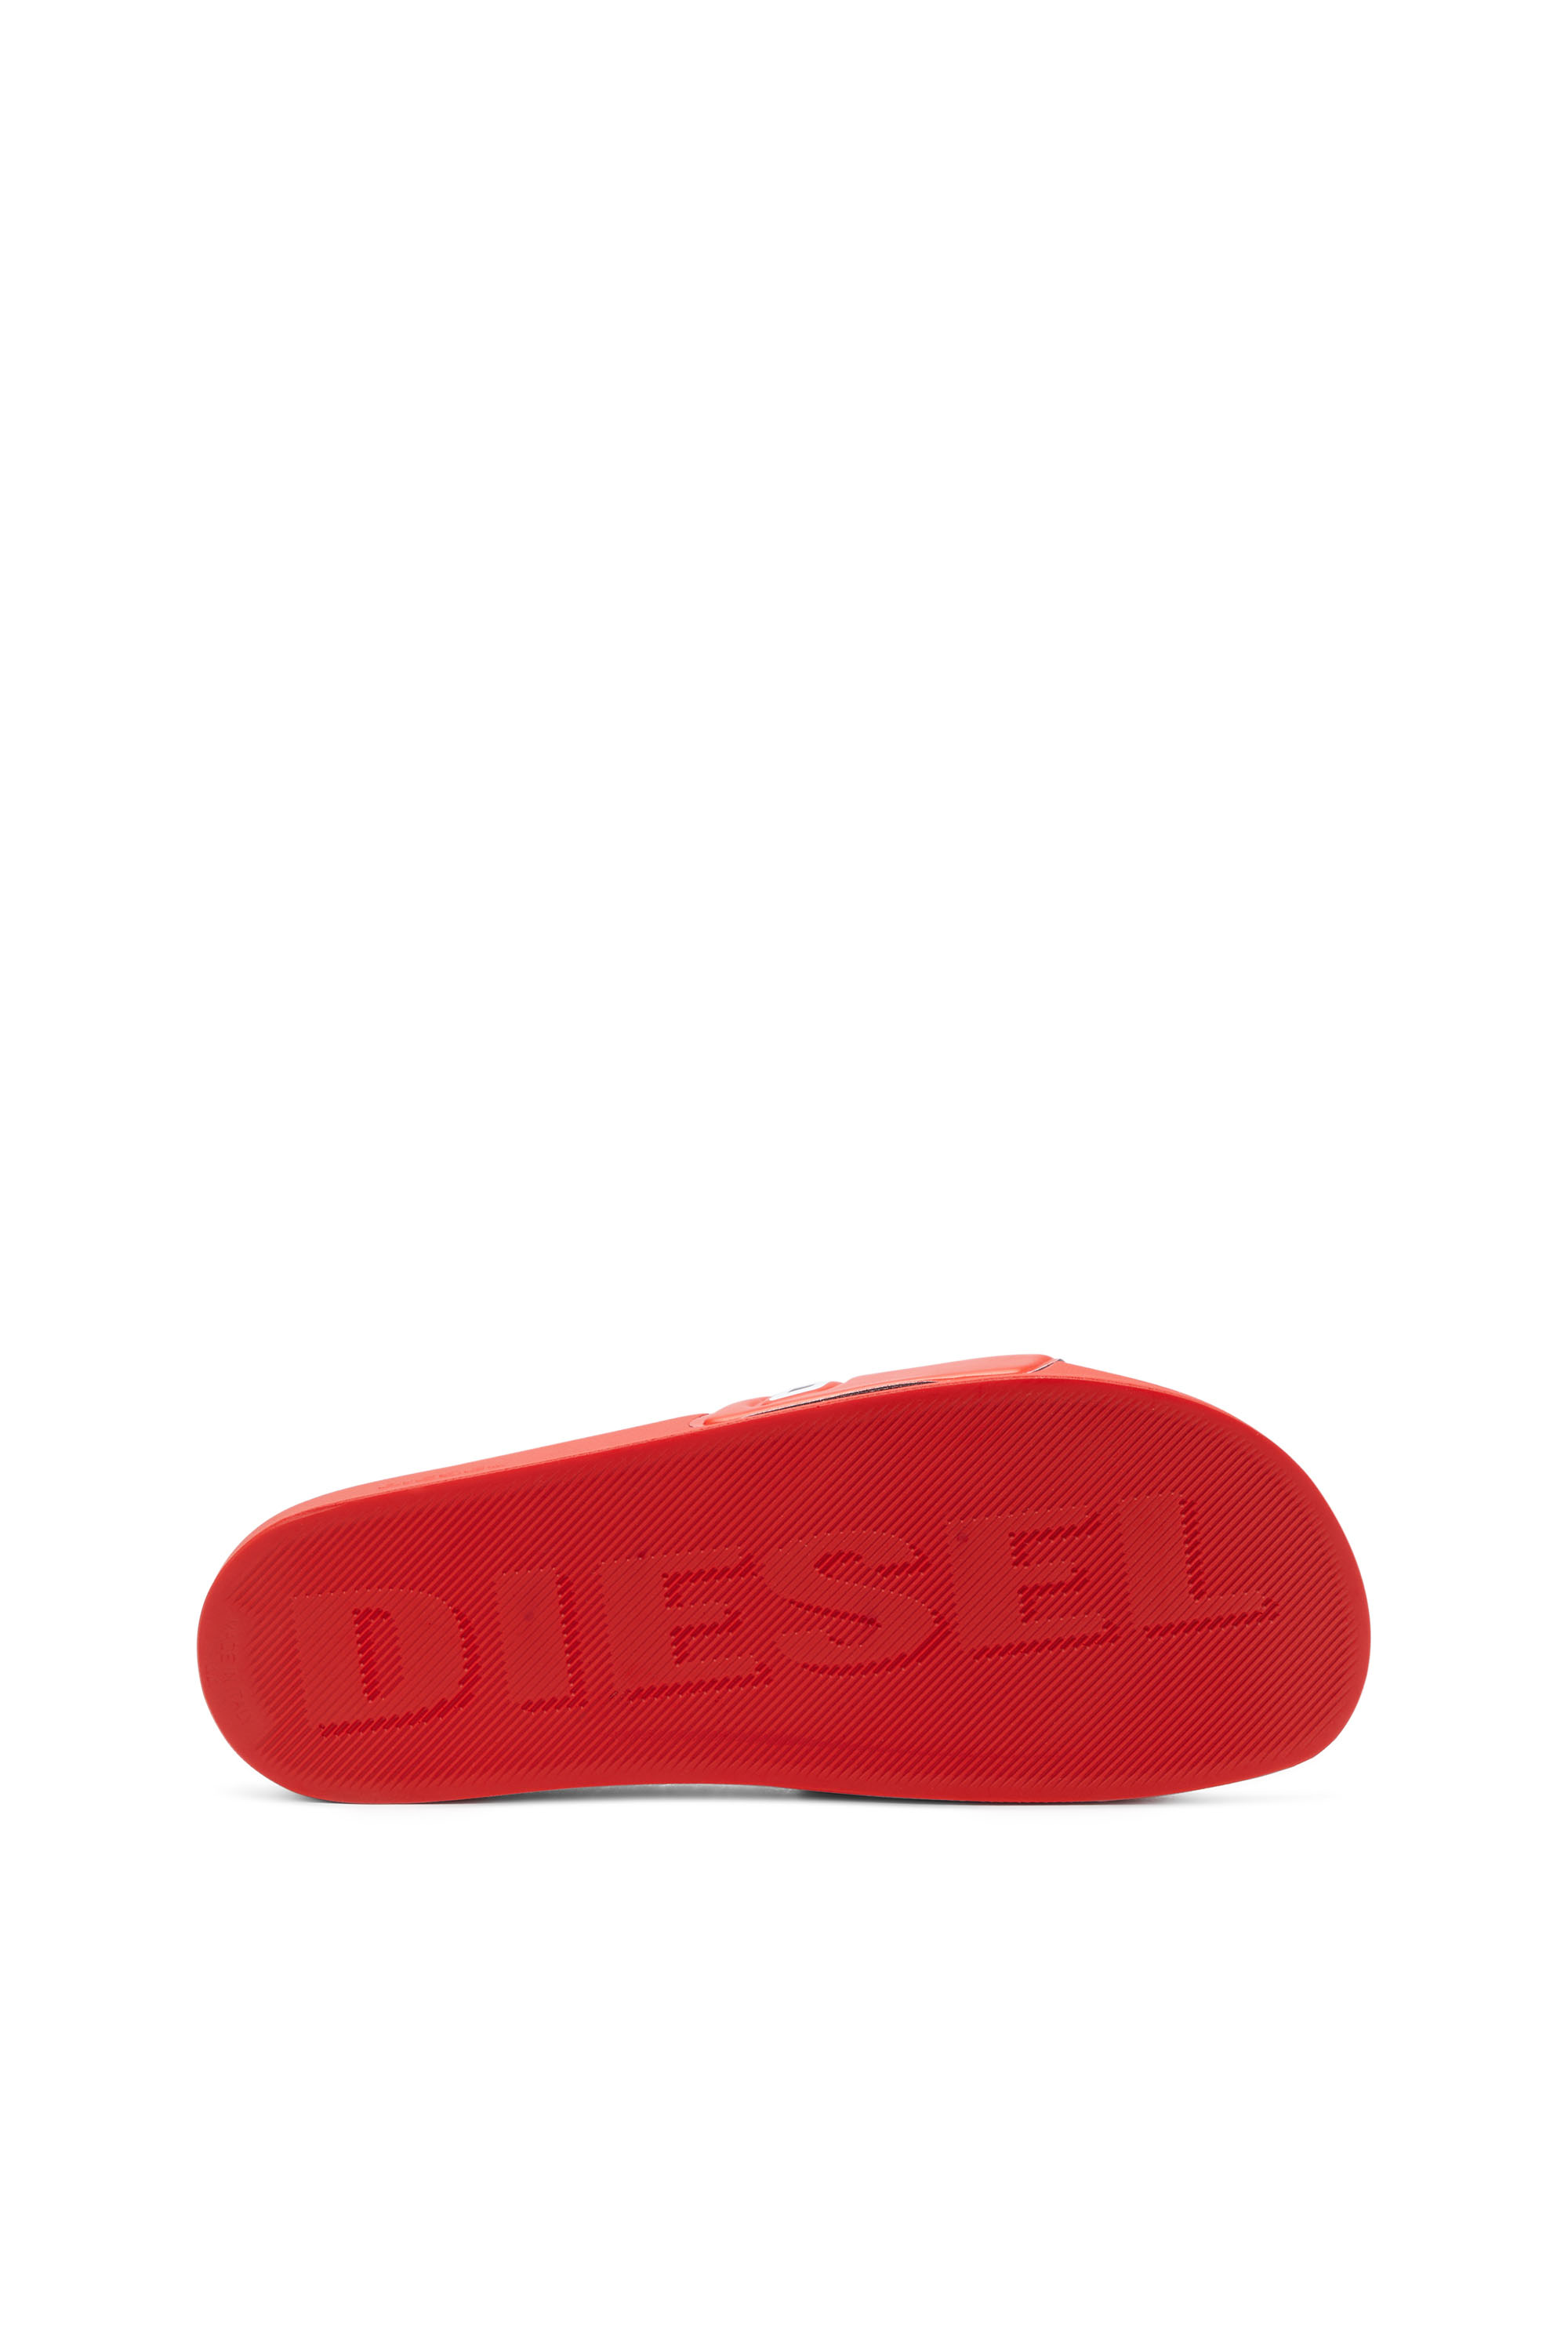 Diesel - SA-MAYEMI D, Black/Red - Image 4